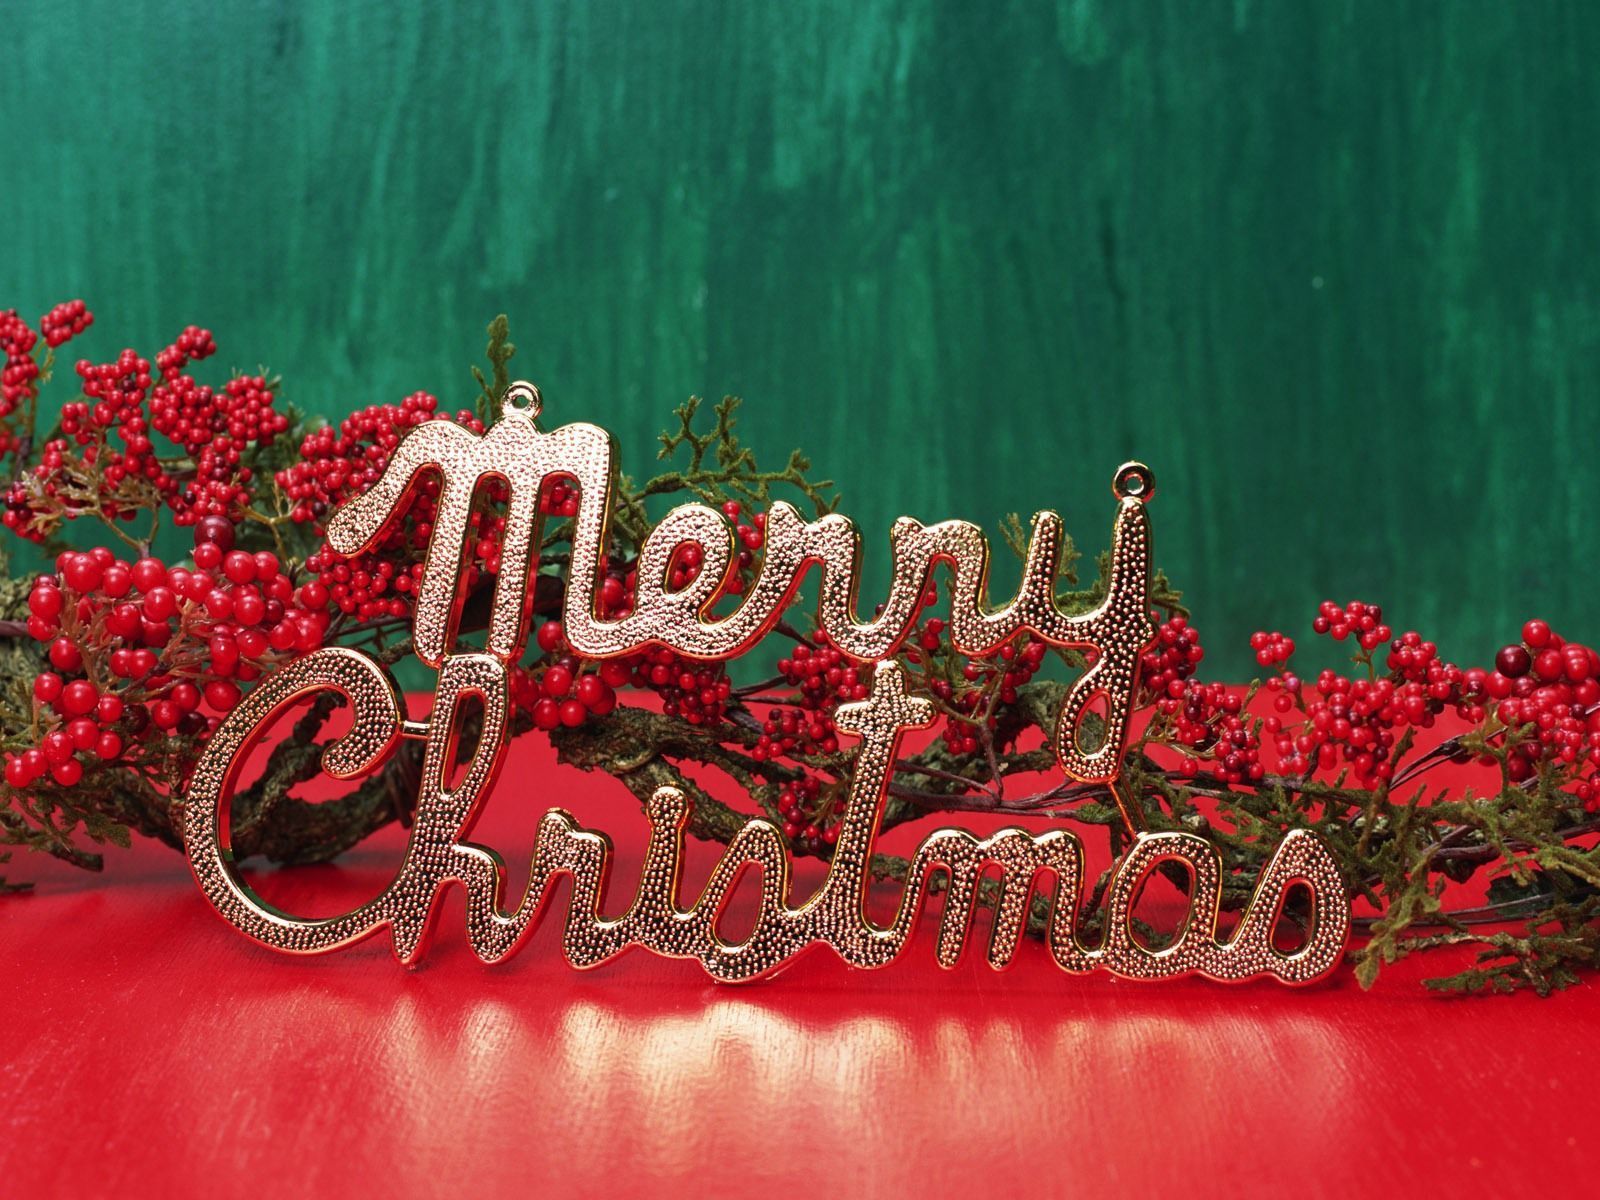 2015 merry Christmas desktop wallpaper - images, photos, pictures